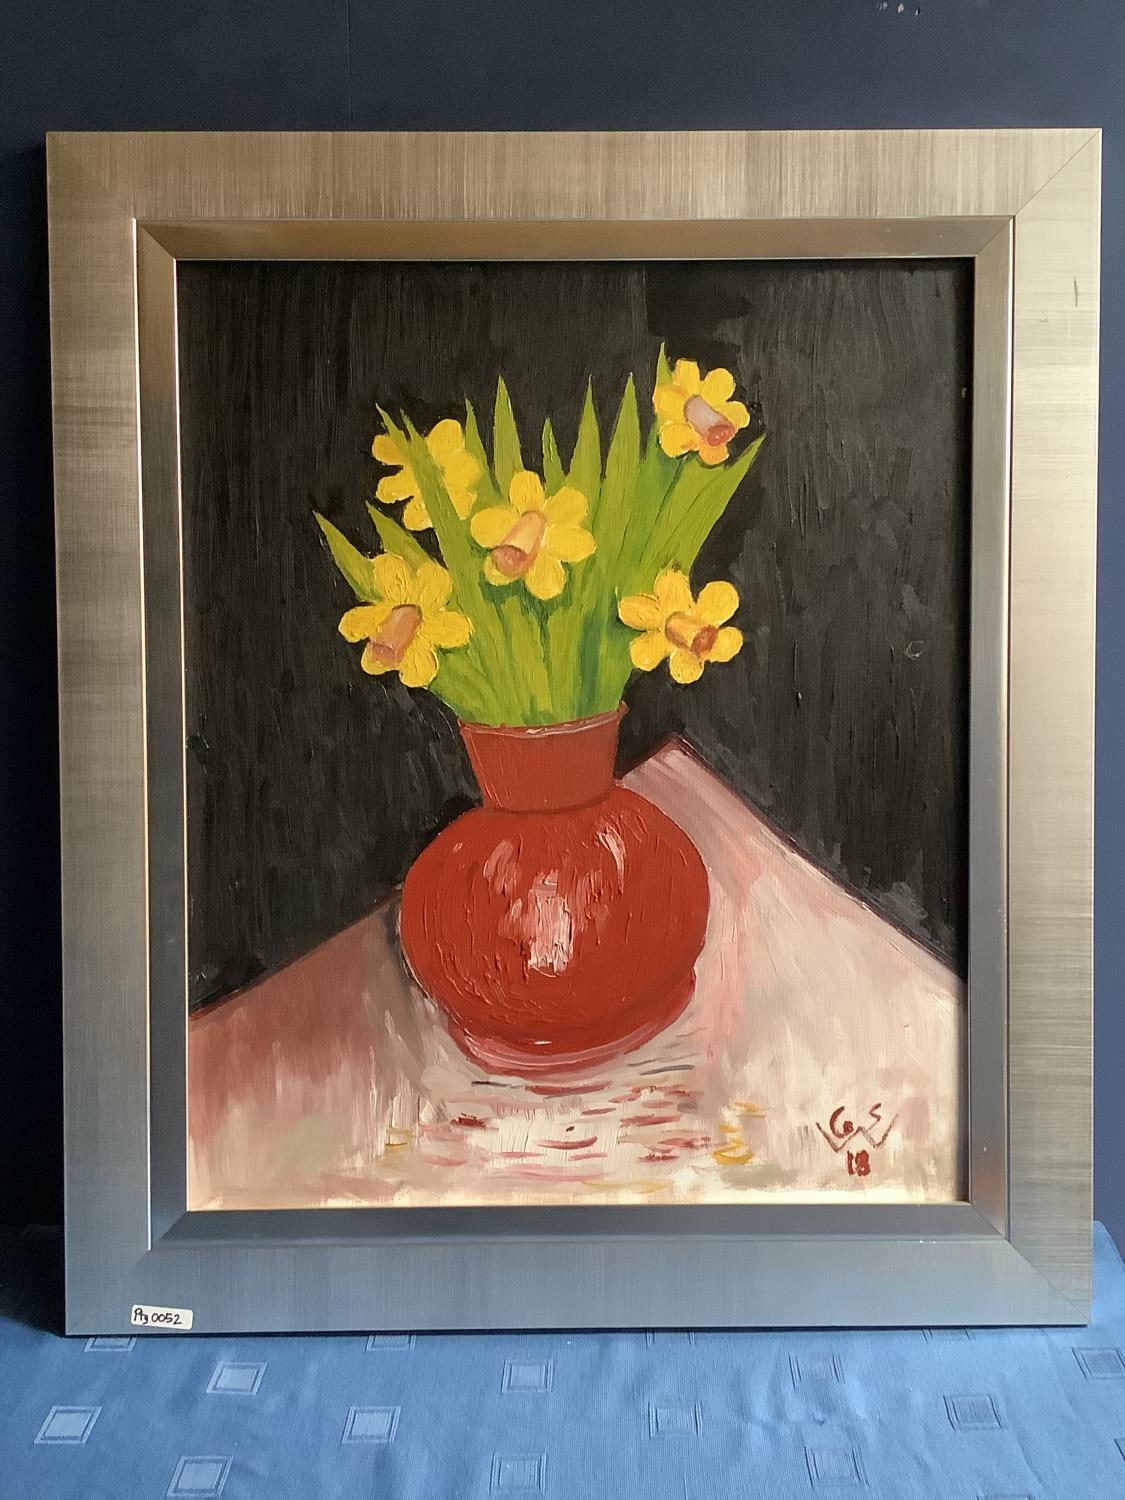 GEORGE S WISSINGER. Modern Oil , framed, "Still life daffodils in red vase", 59 x 49cm - Image 2 of 2